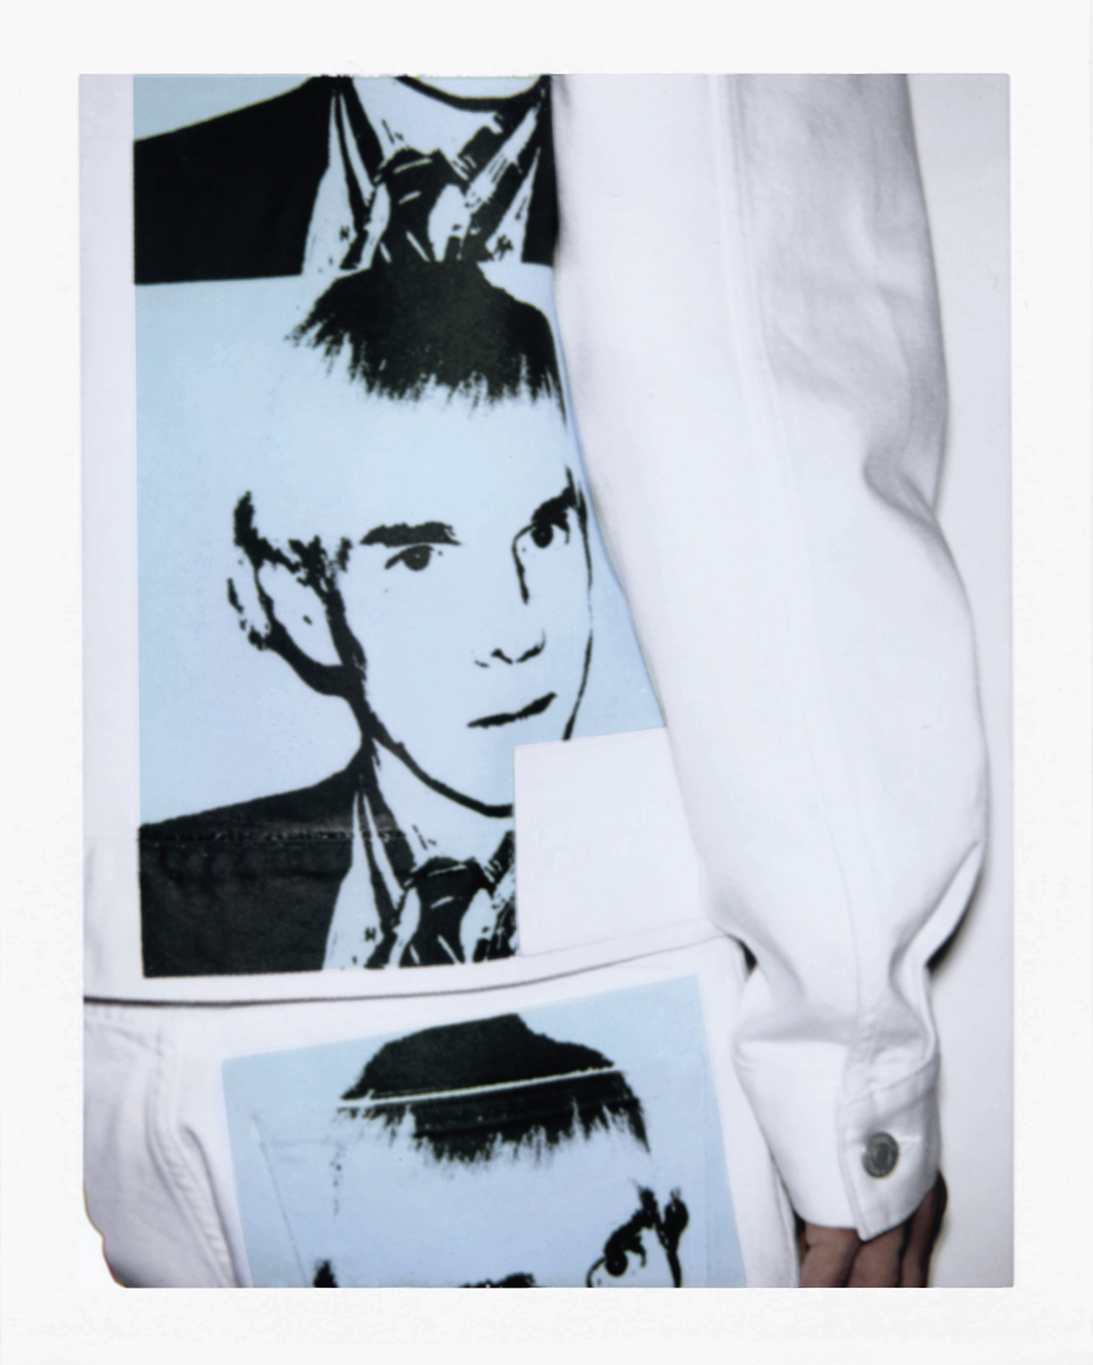 Calvin Klein Jeans Andy Warhol Self Portrait Collection collaboration release date info drop denim print pop art foundation june 7 2018 web store